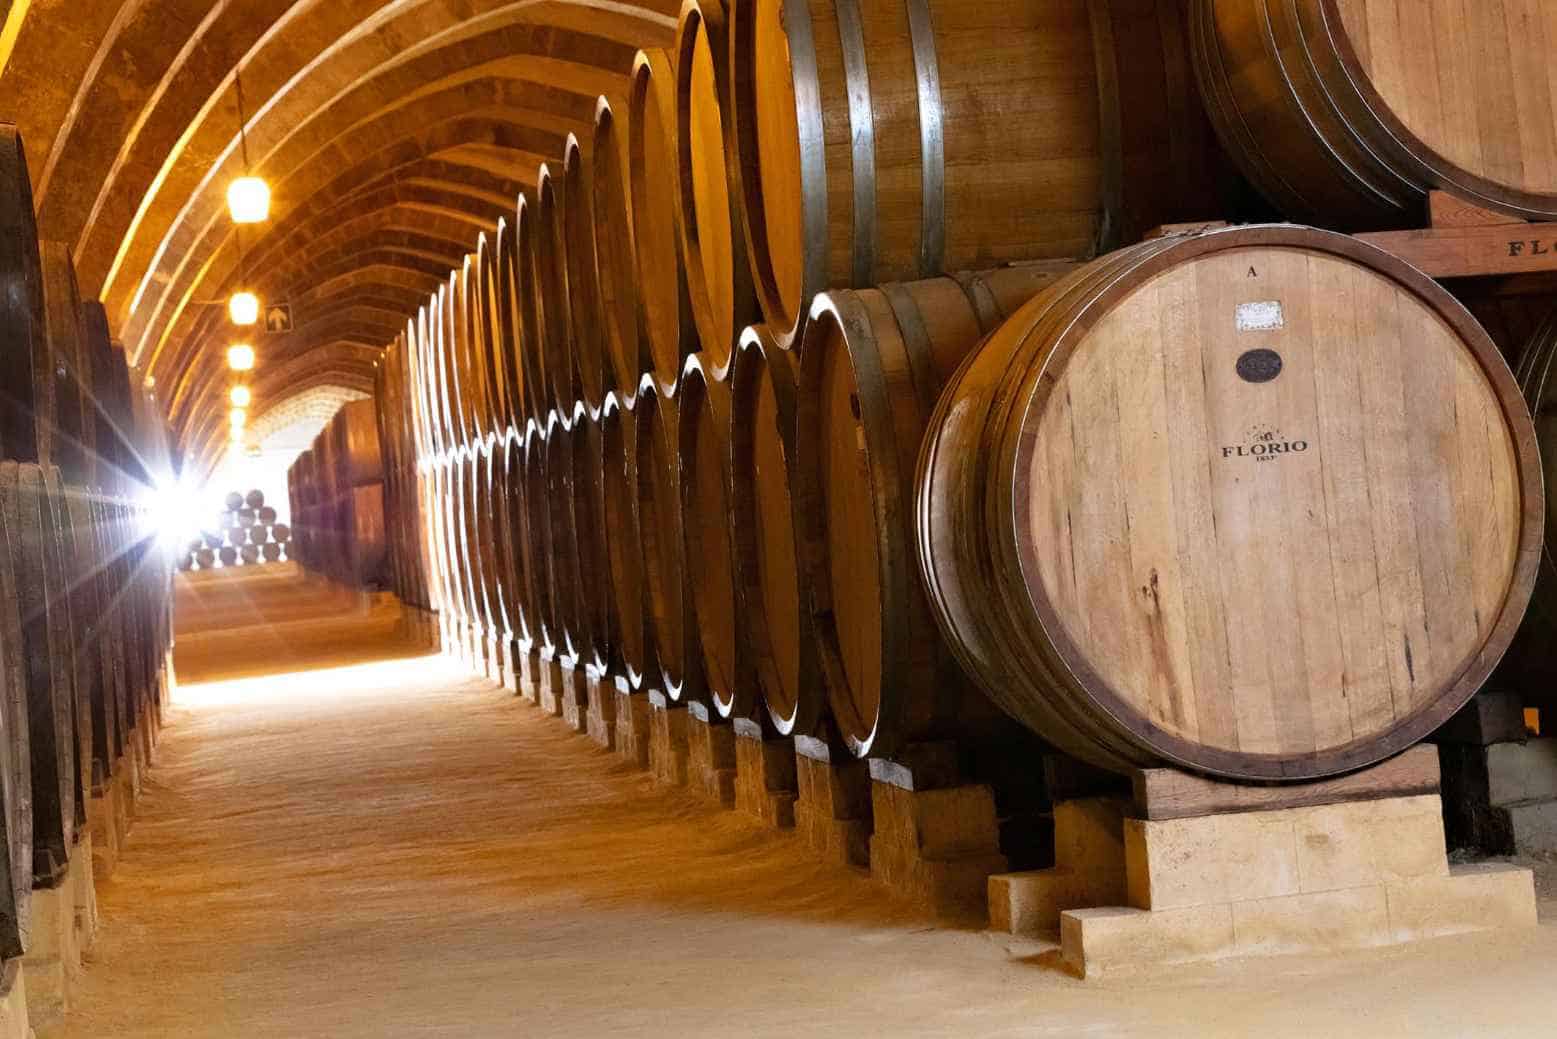 Marsala Wine & Its Production